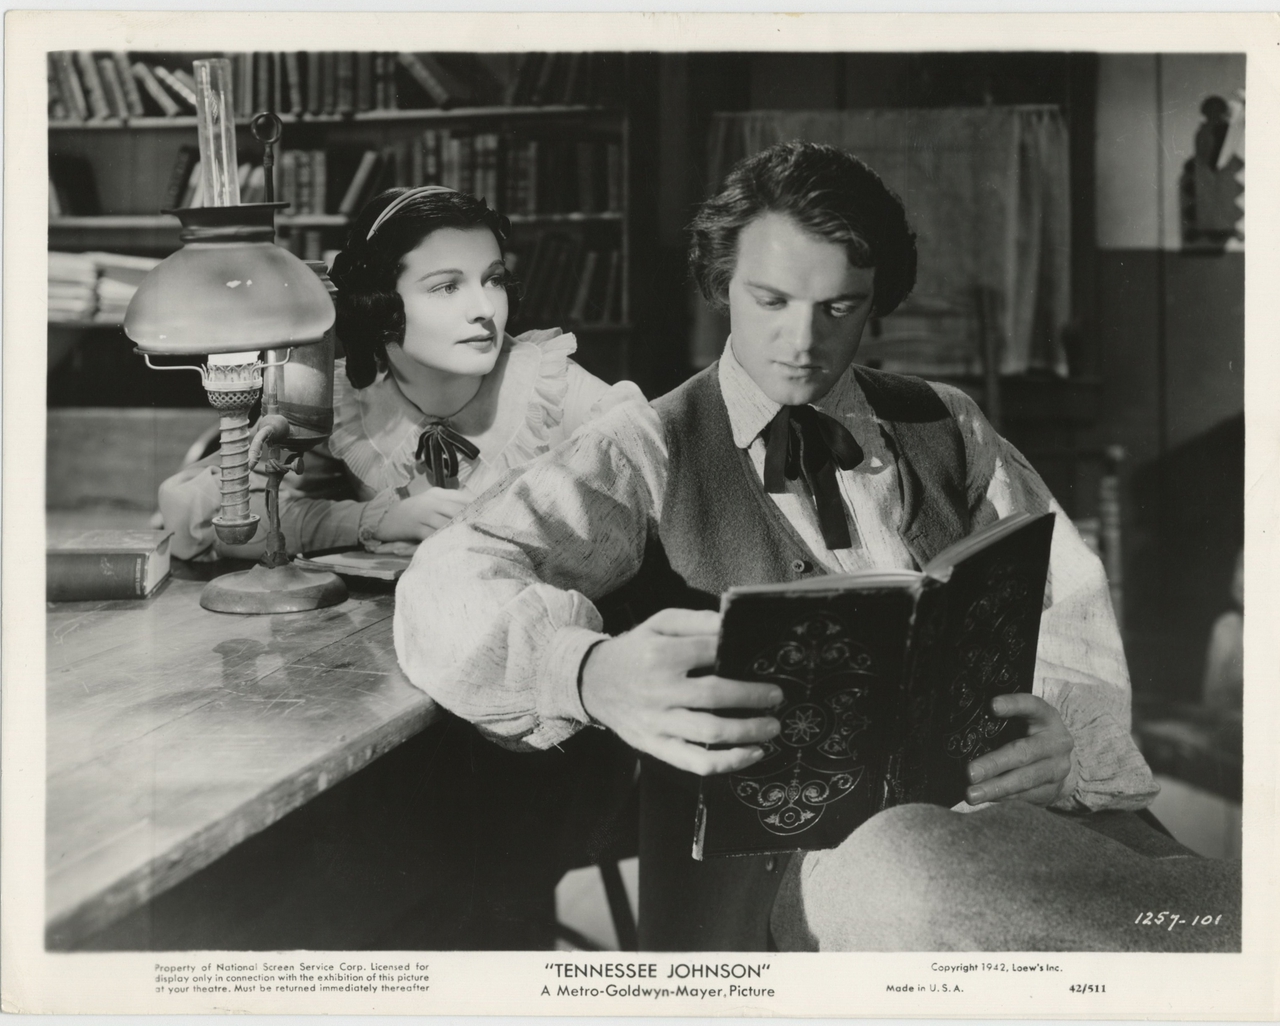 Ruth Hussey در صحنه فیلم سینمایی Tennessee Johnson به همراه Van Heflin